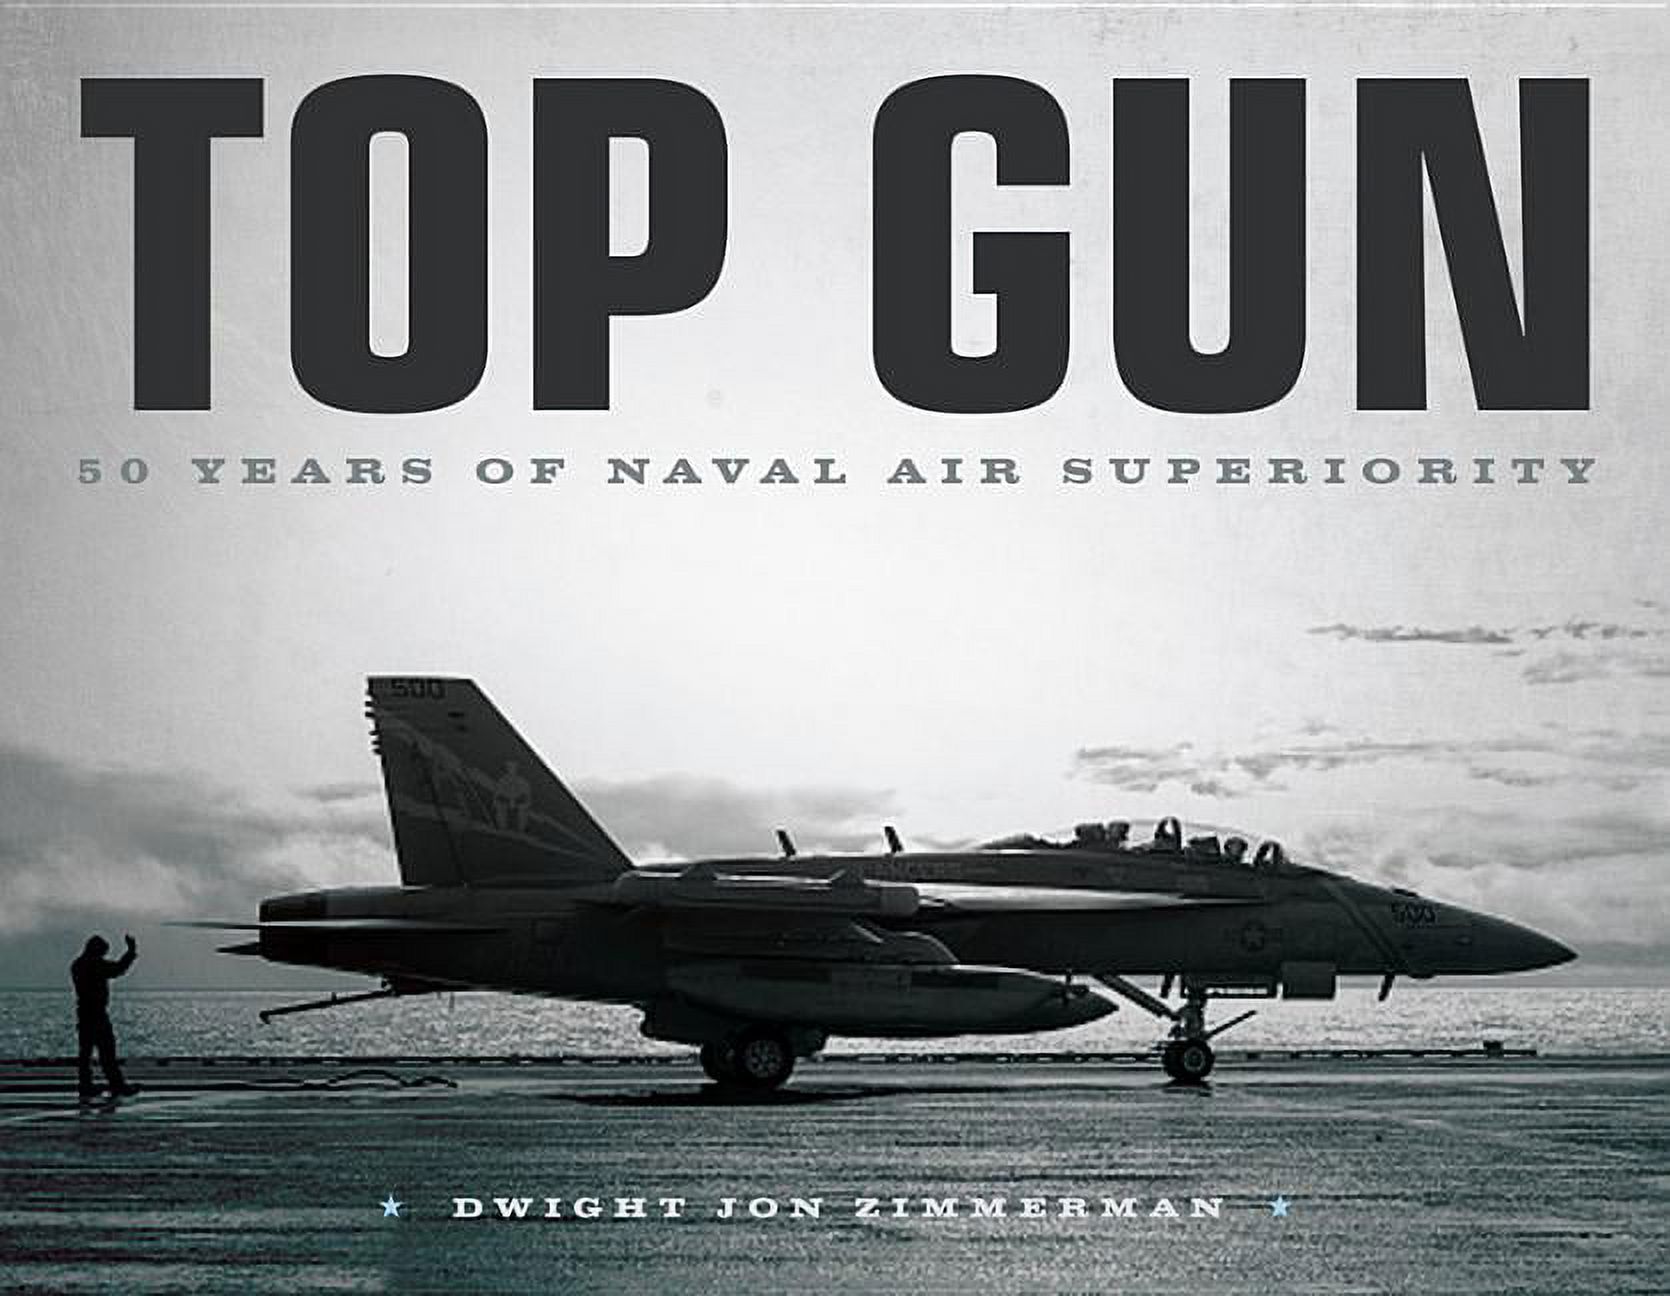 Top Gun : 50 Years of Naval Air Superiority (Hardcover) - image 1 of 1